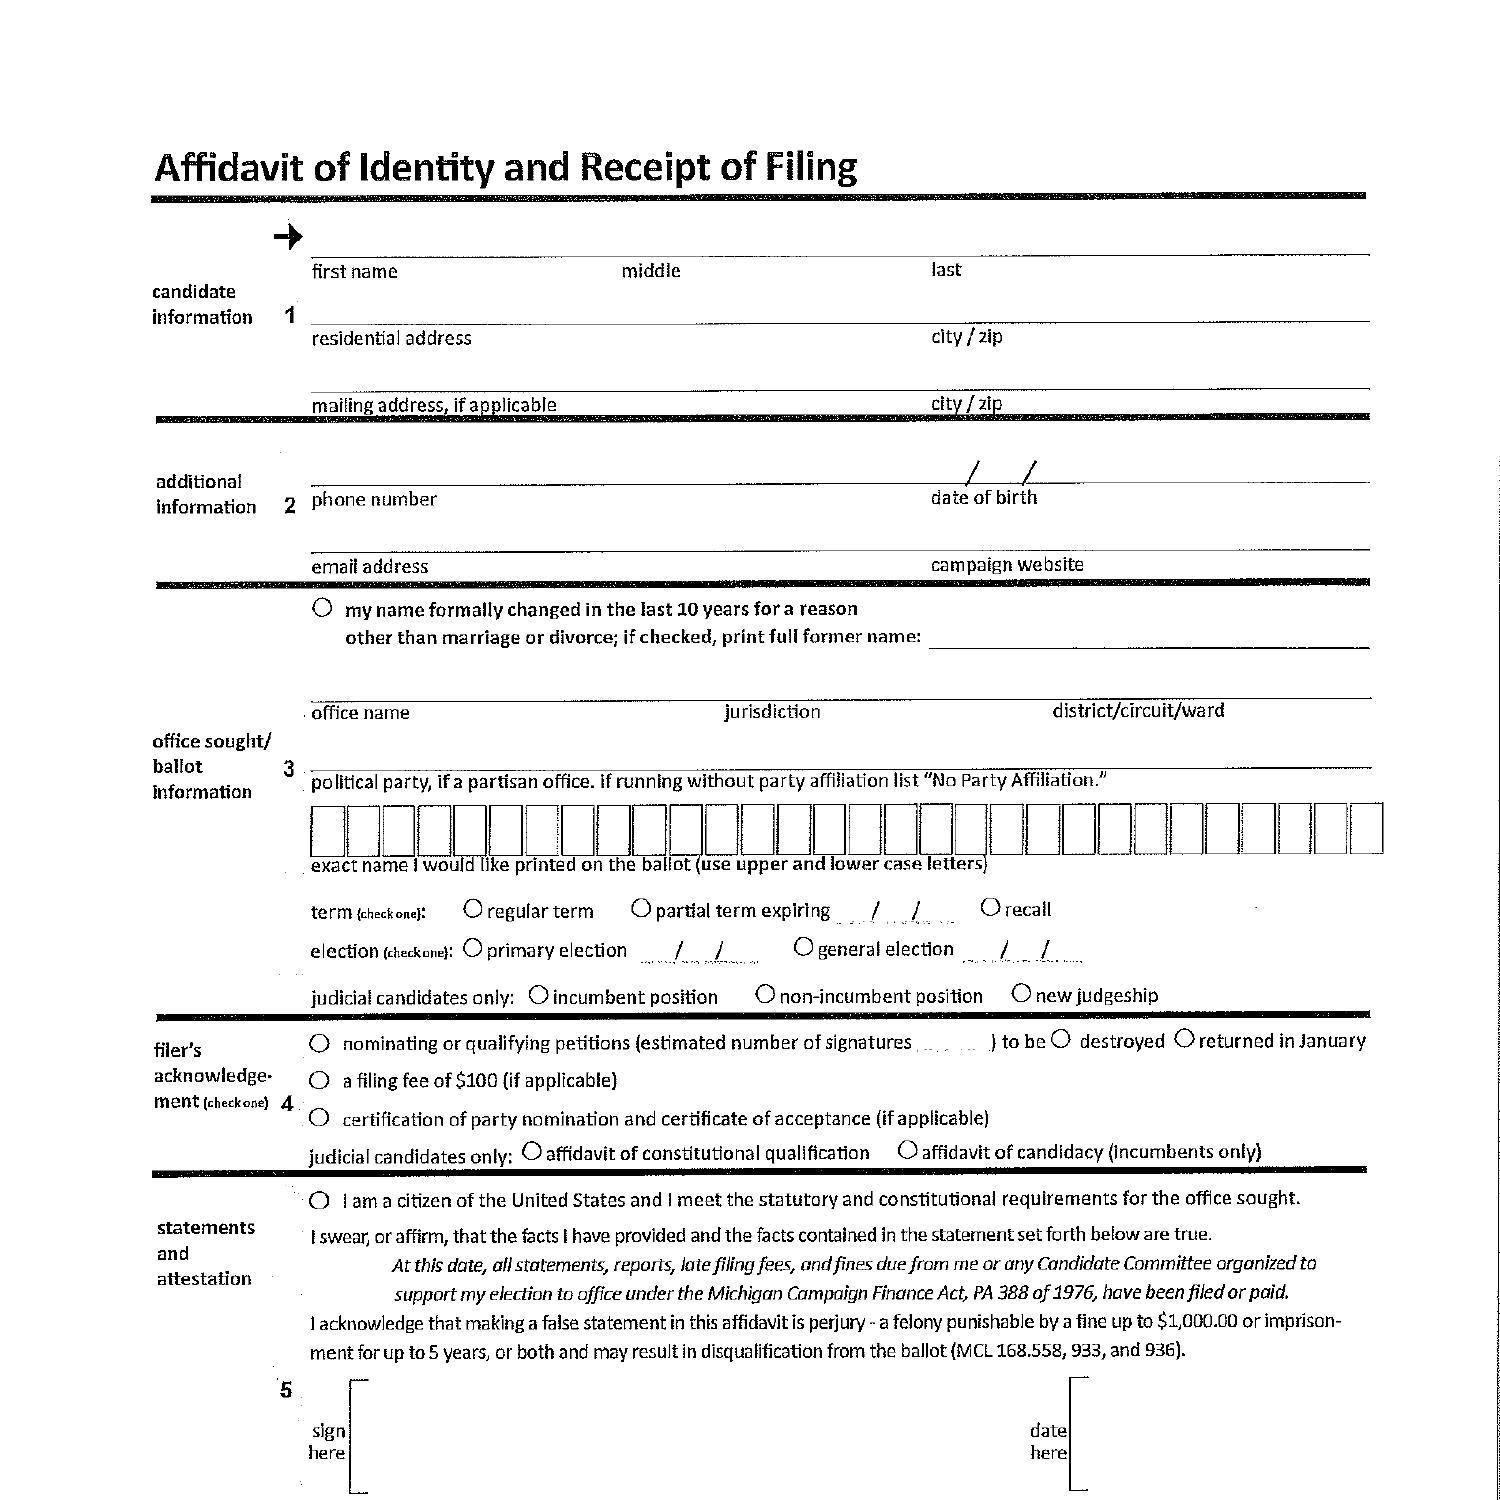 affidavit-of-identity-form-pdf-docdroid